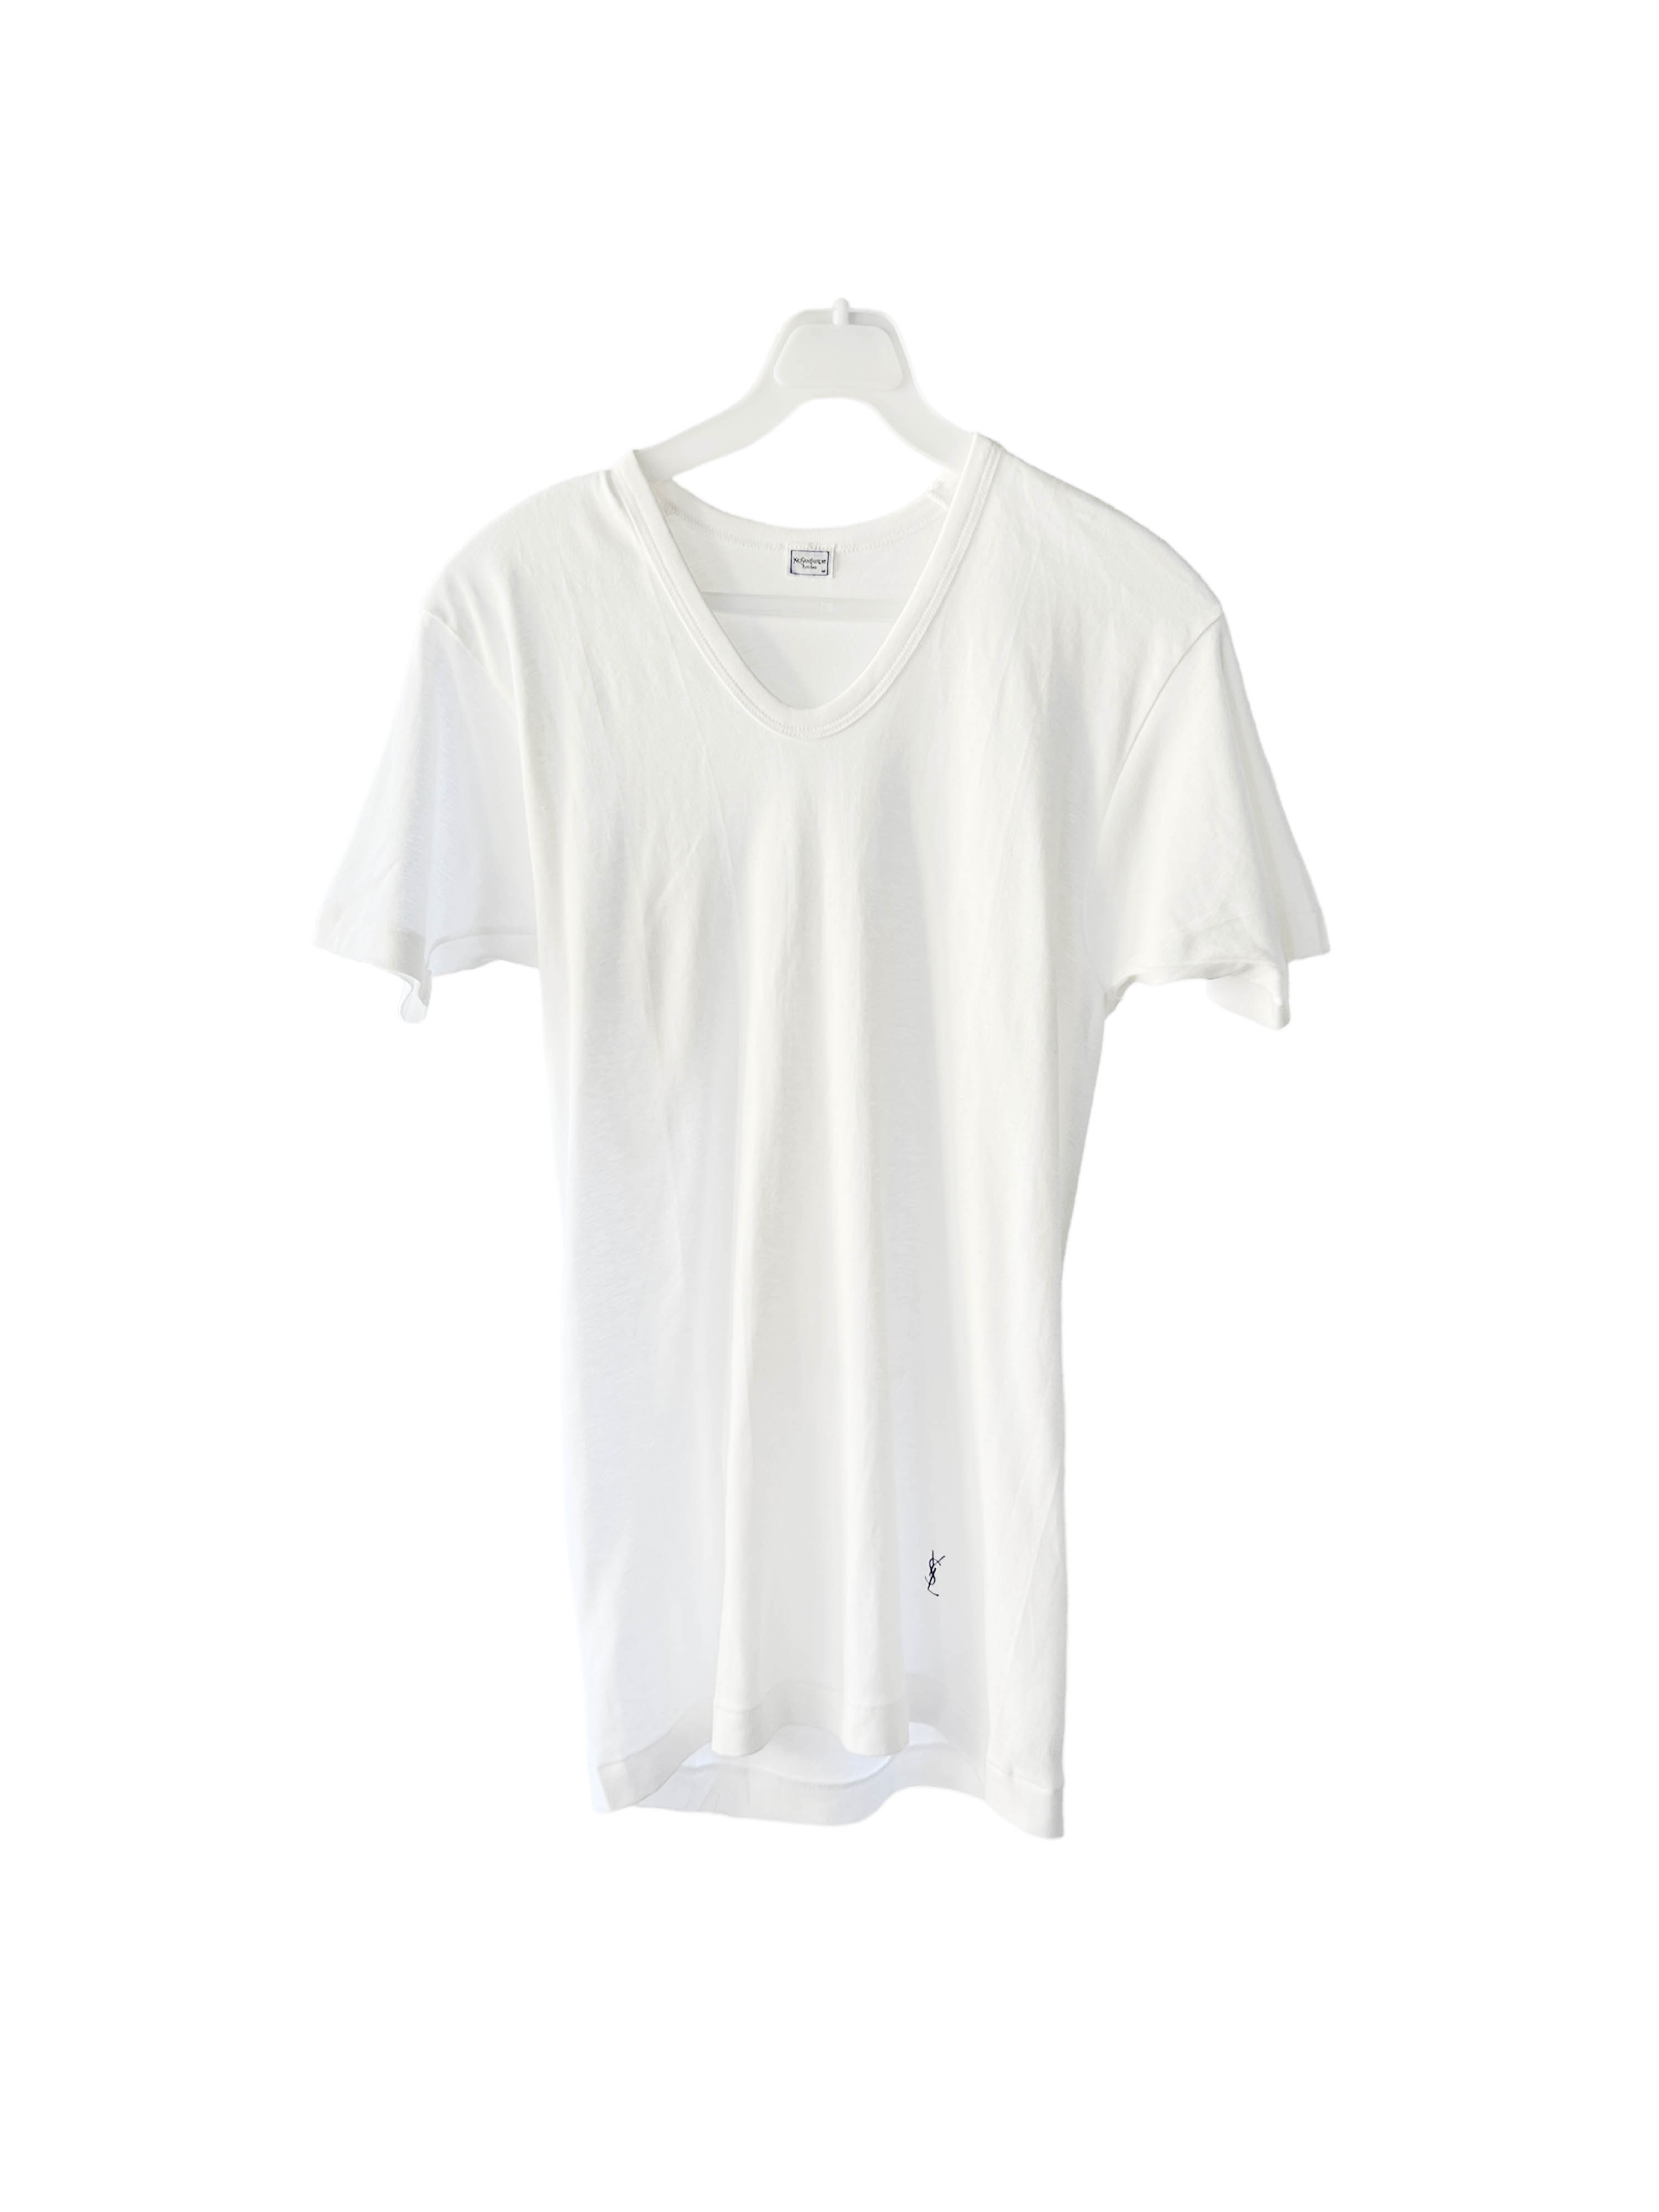 Yves Saint Laurent homme vneck t-shirts